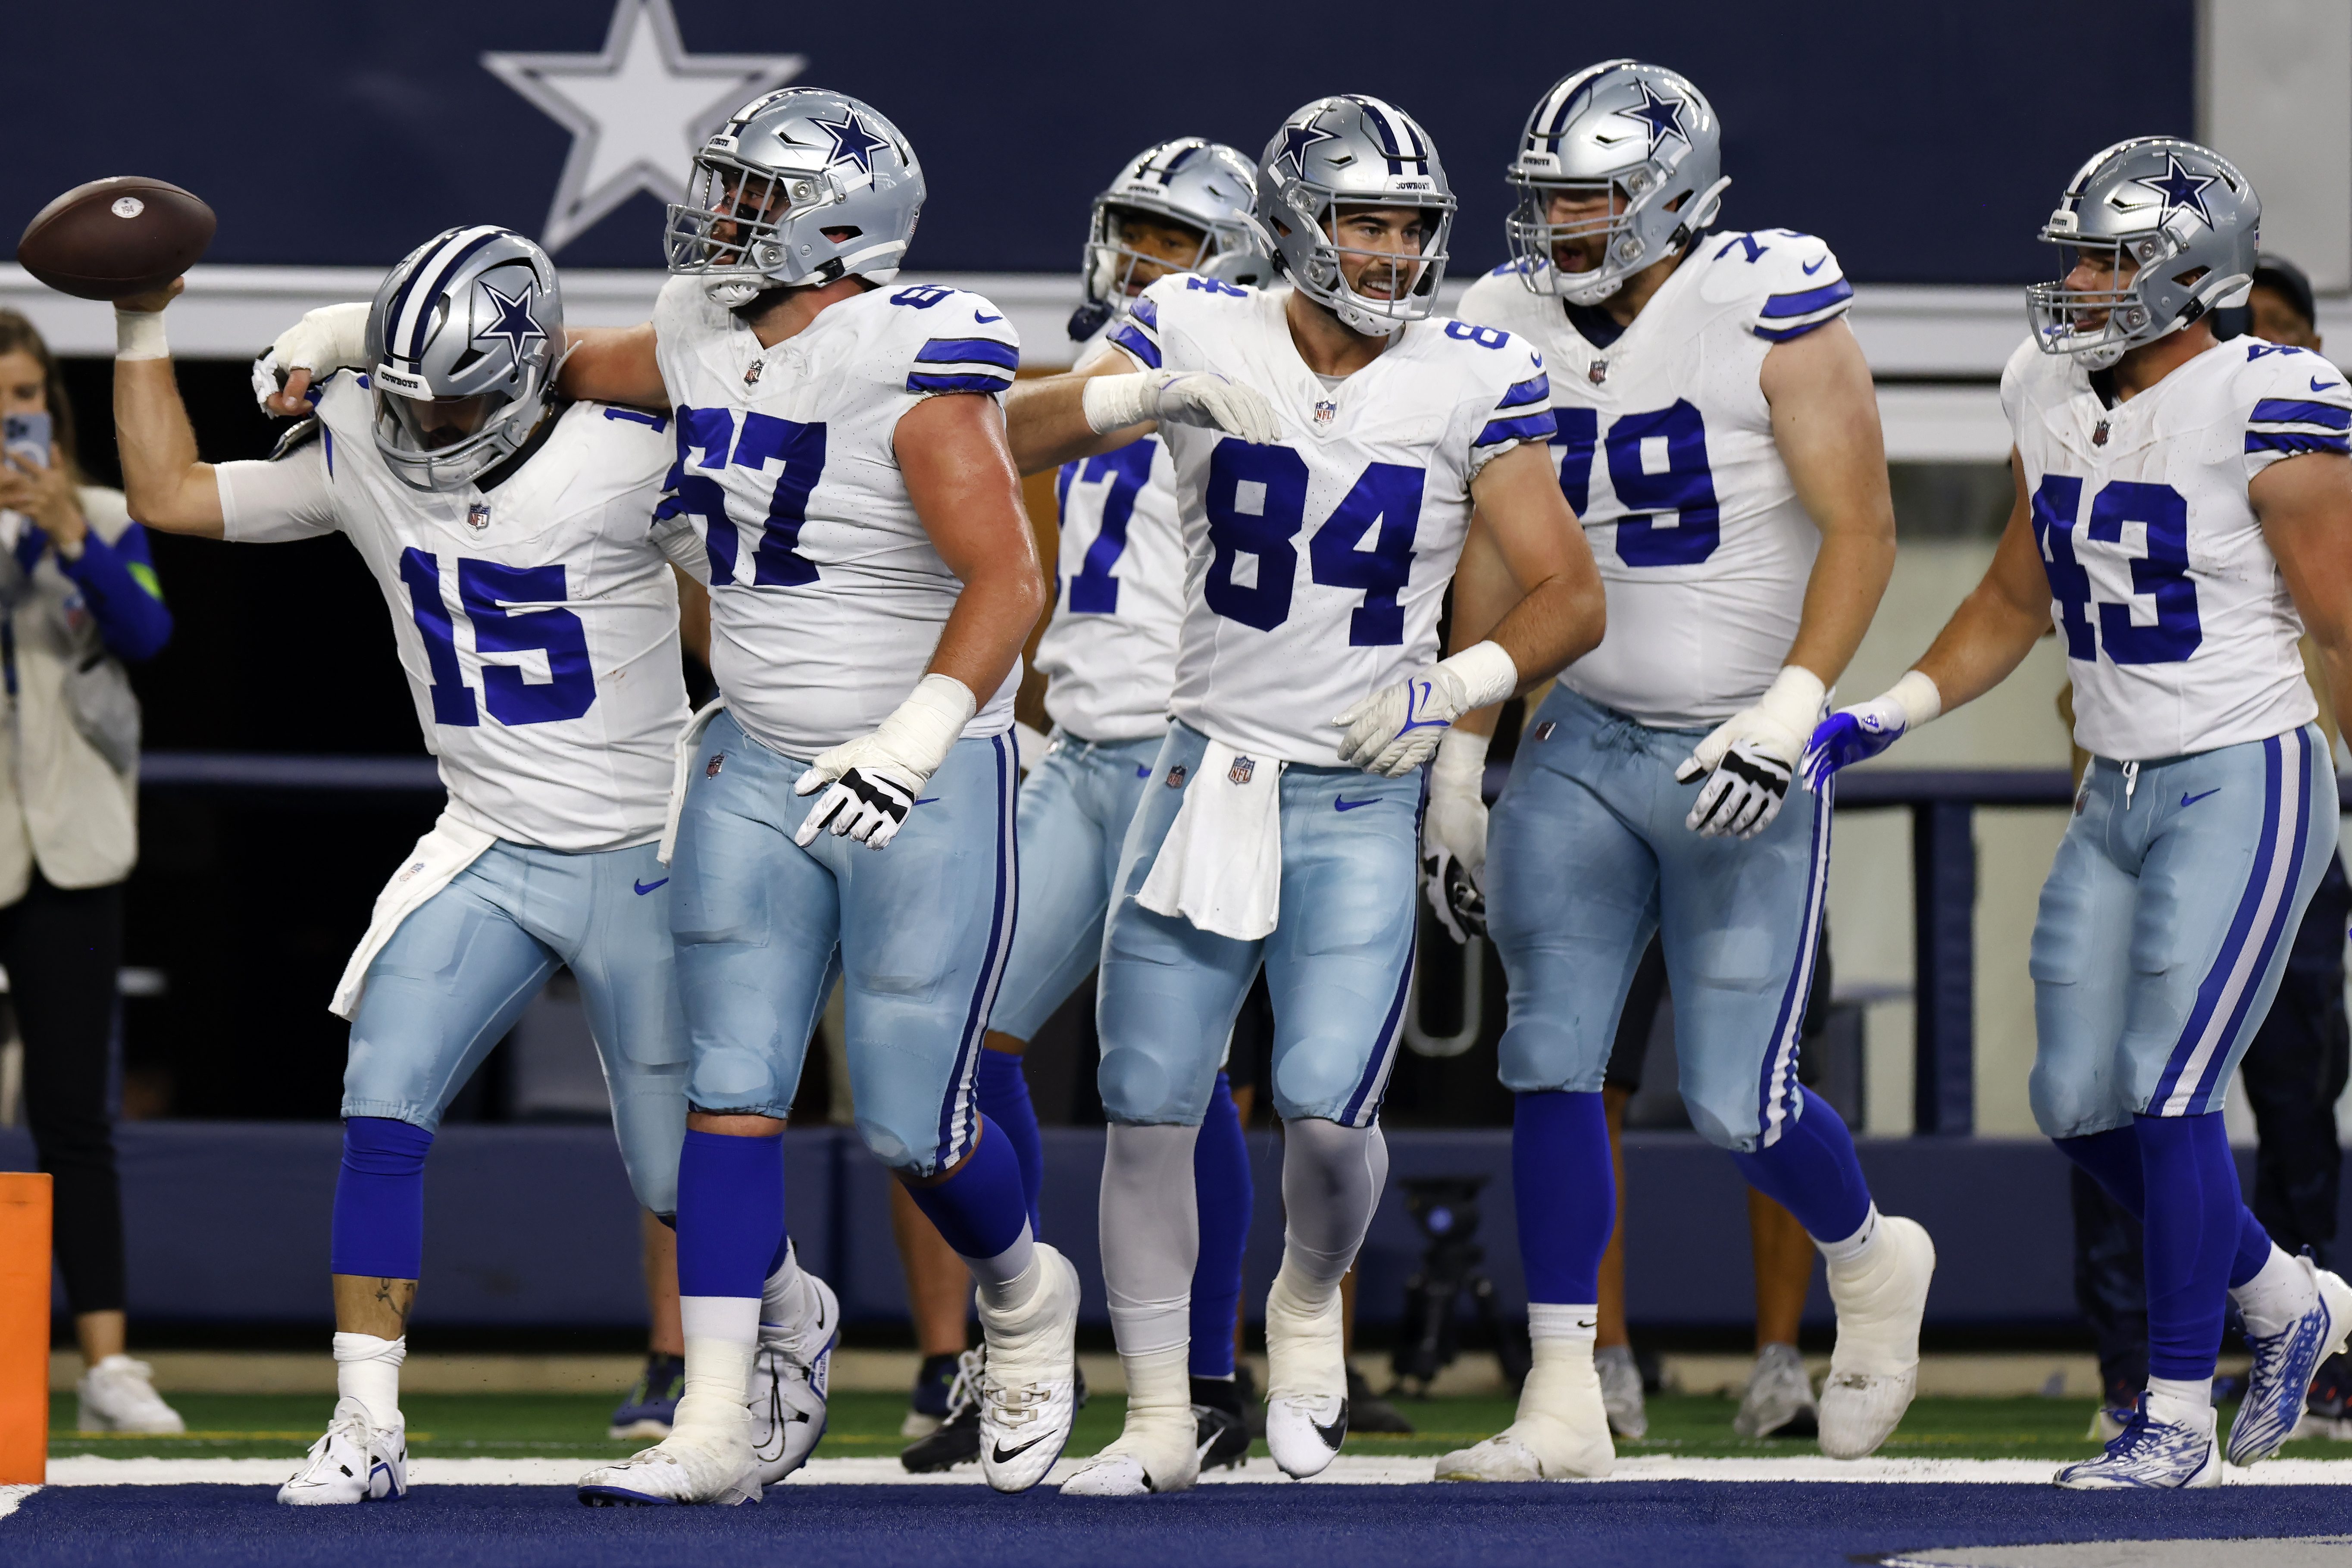 The Cowboys' New Team Theme 'Carpe Omnia' Is a Bad Sign